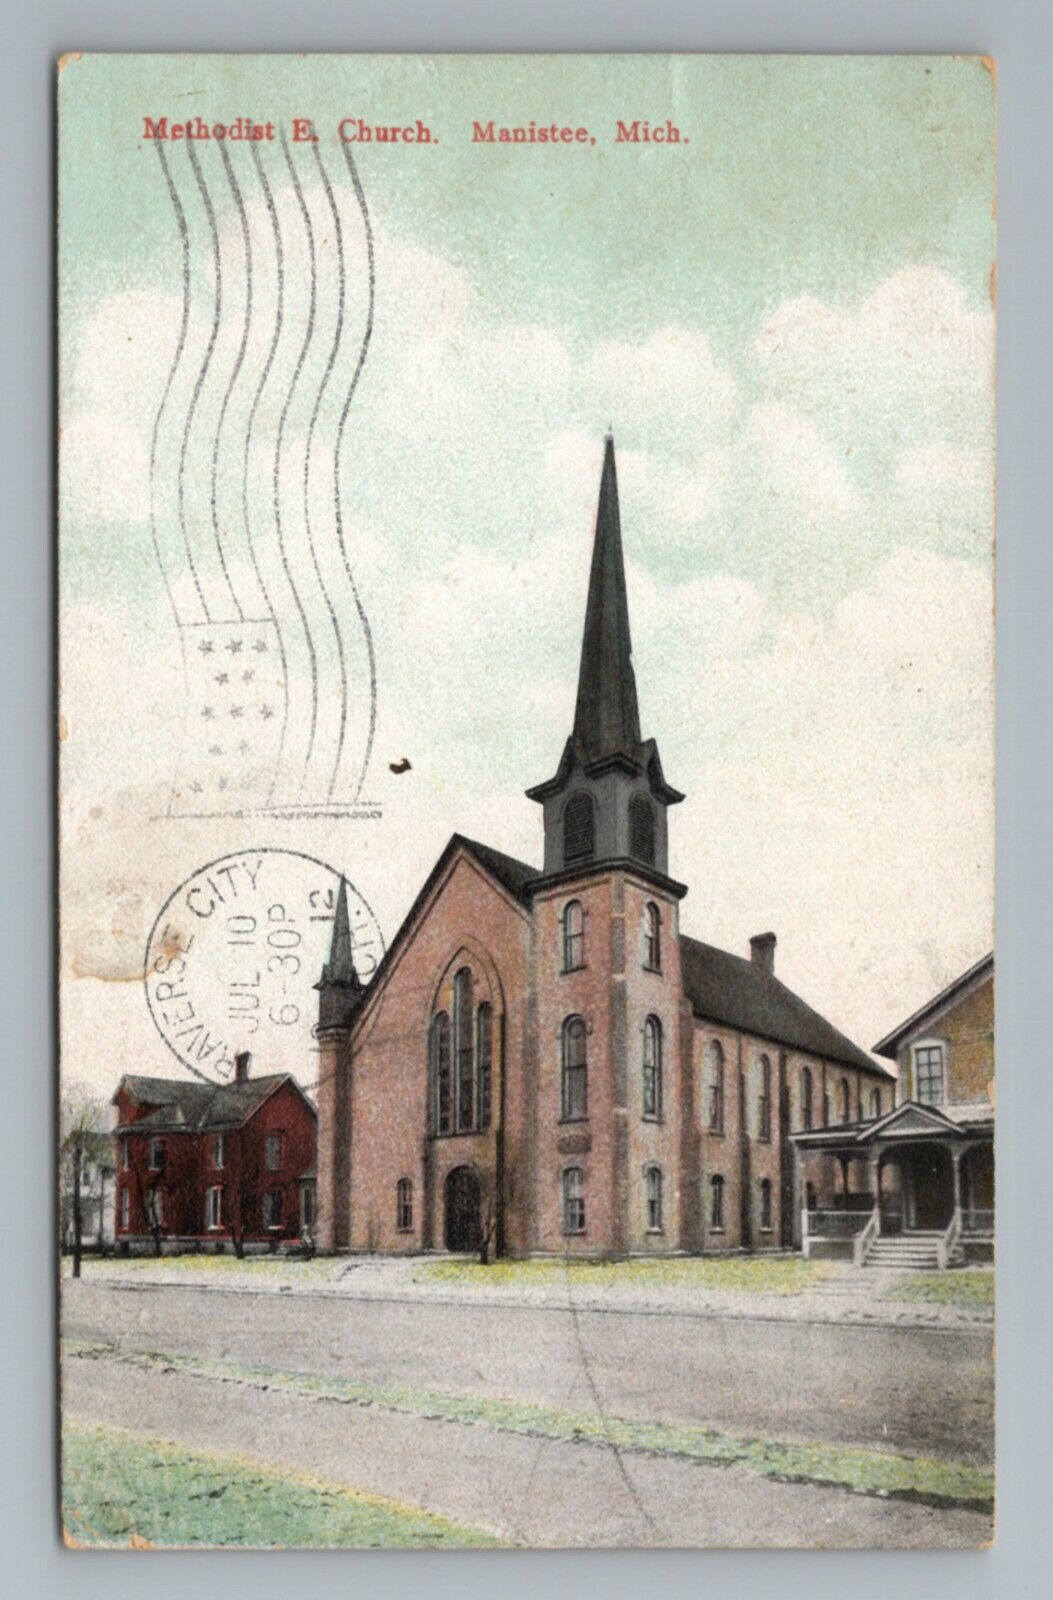 Methodist E. Church, Manistee, Michigan Postcard